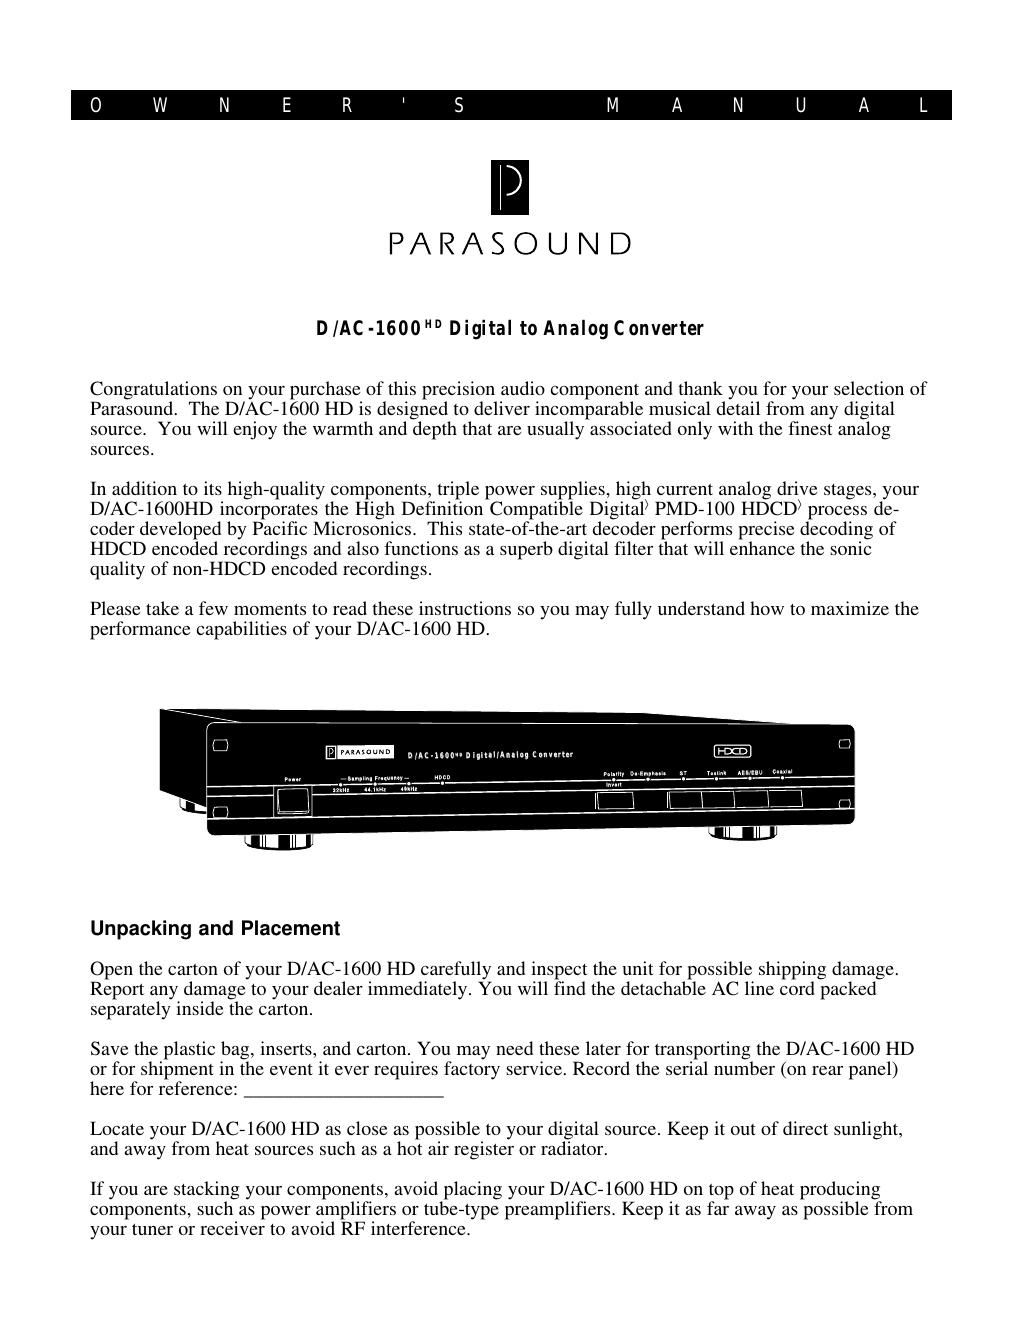 parasound dac 1600 owners manual